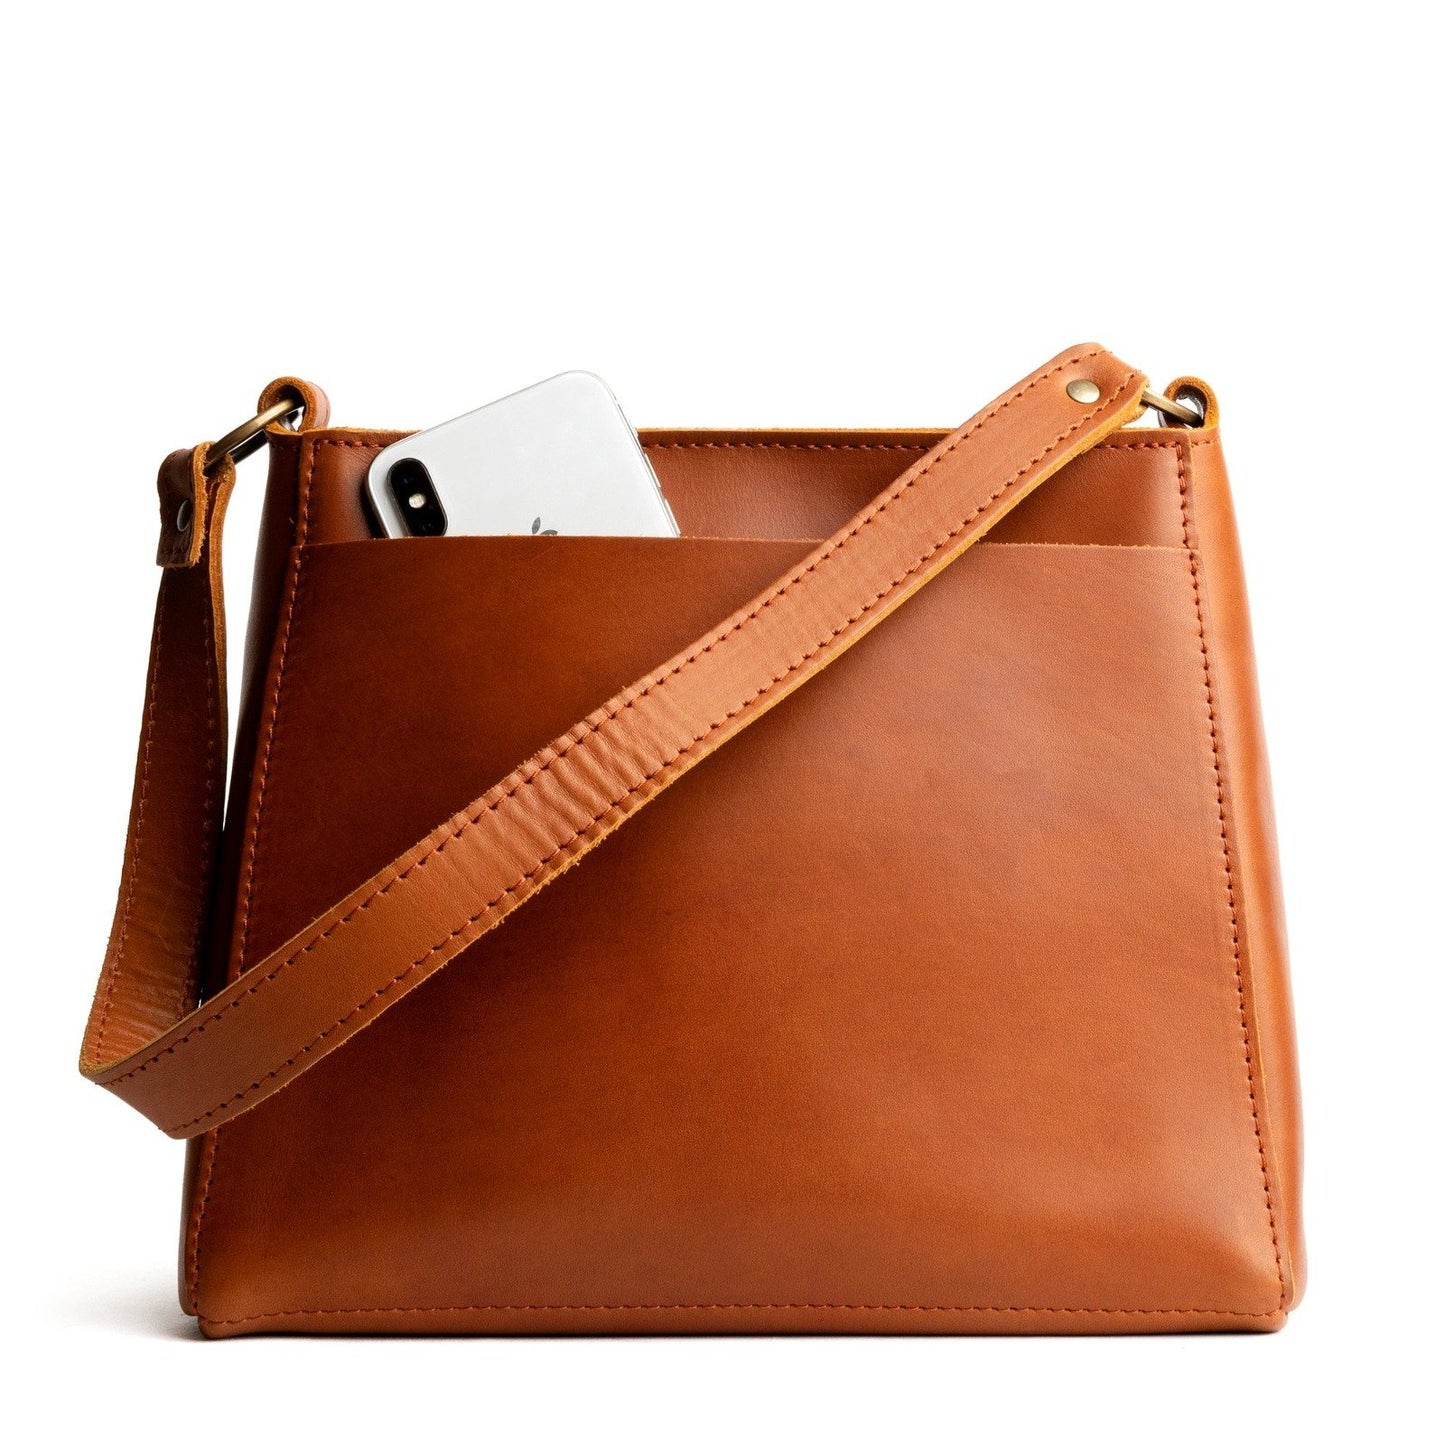 All Color: Honey | Triangle Leather Handmade Bag